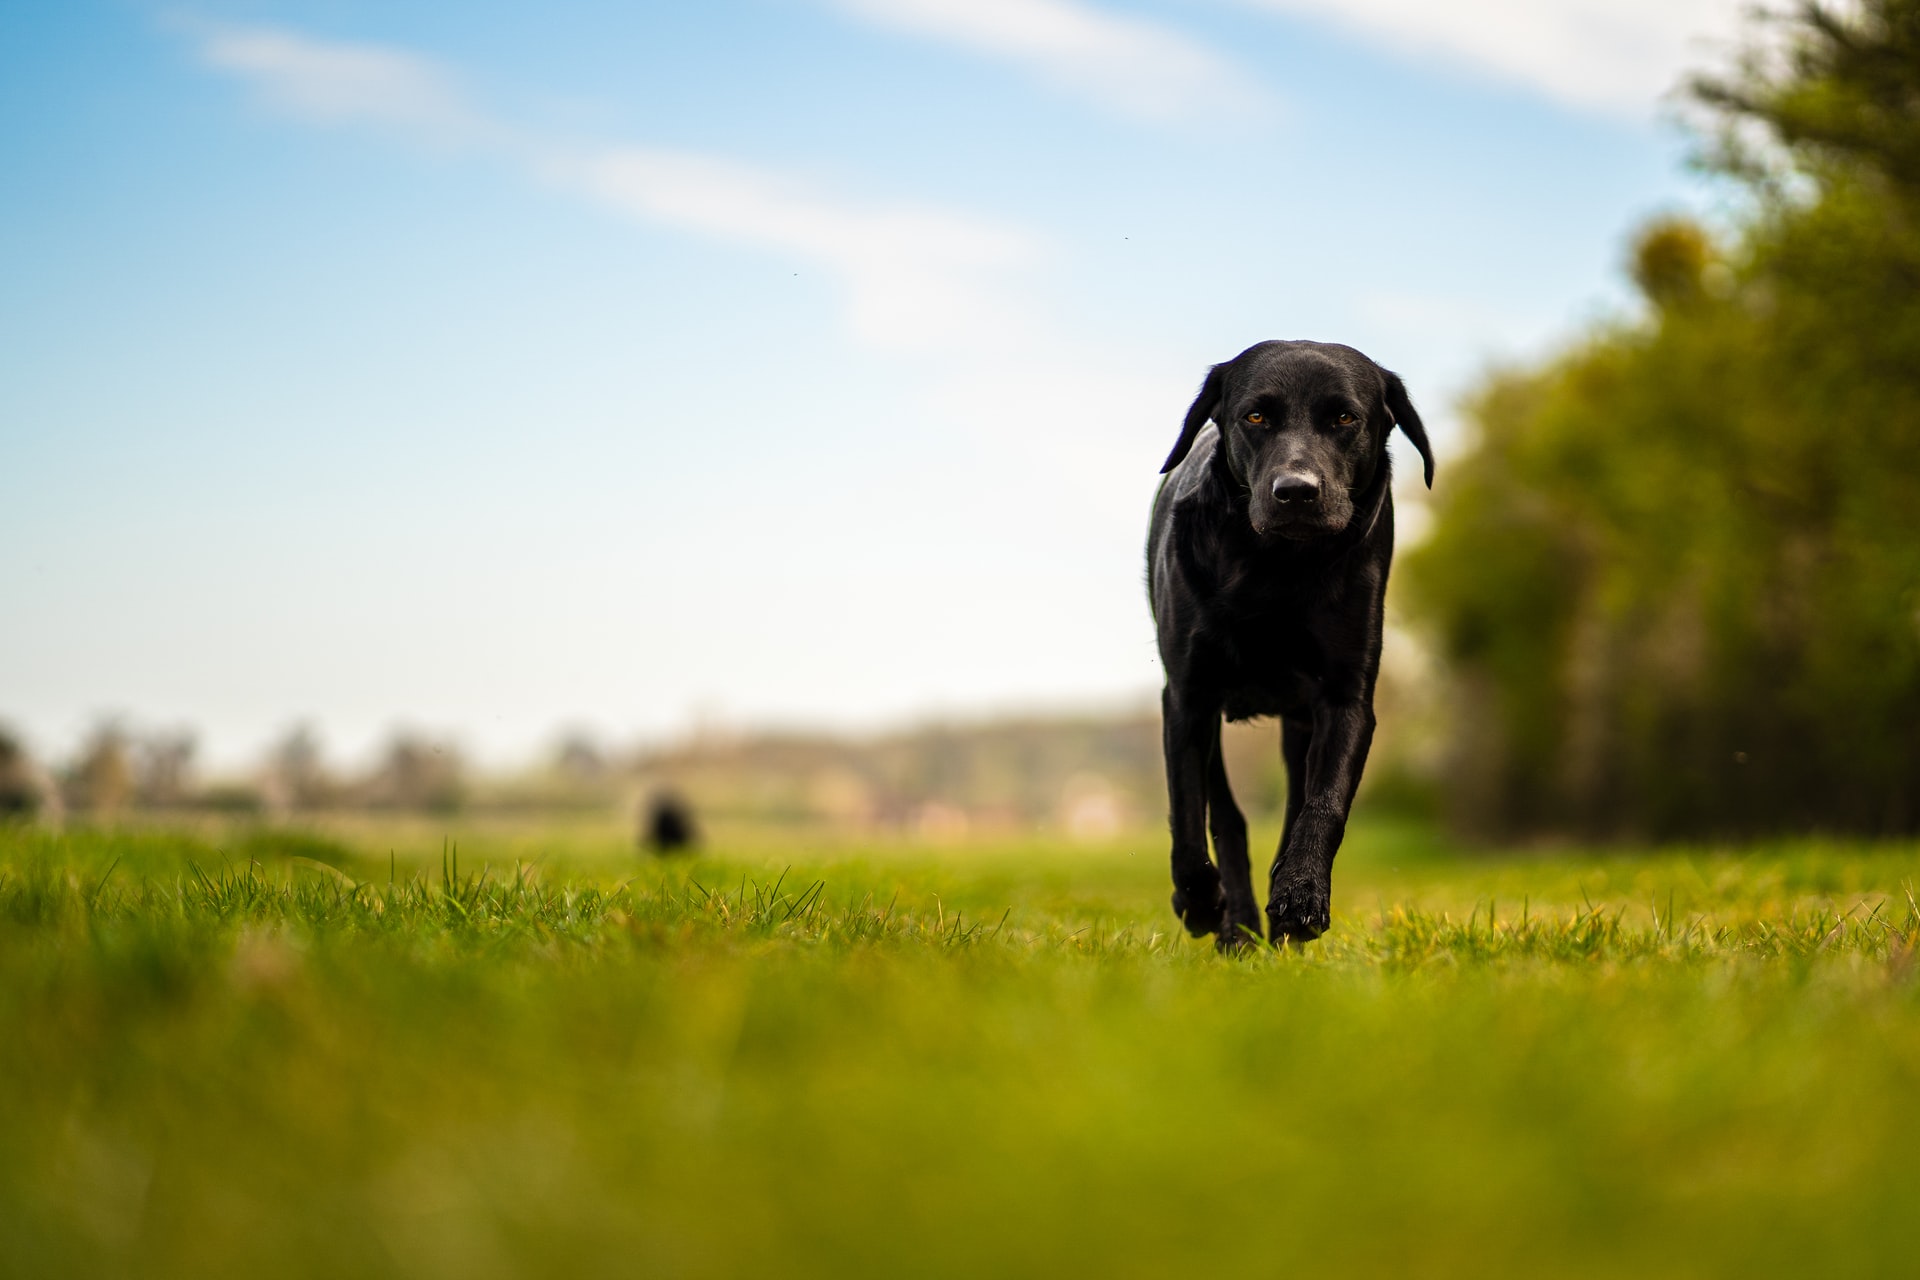 Black Labrador walking outside on green grass against a blue sky.